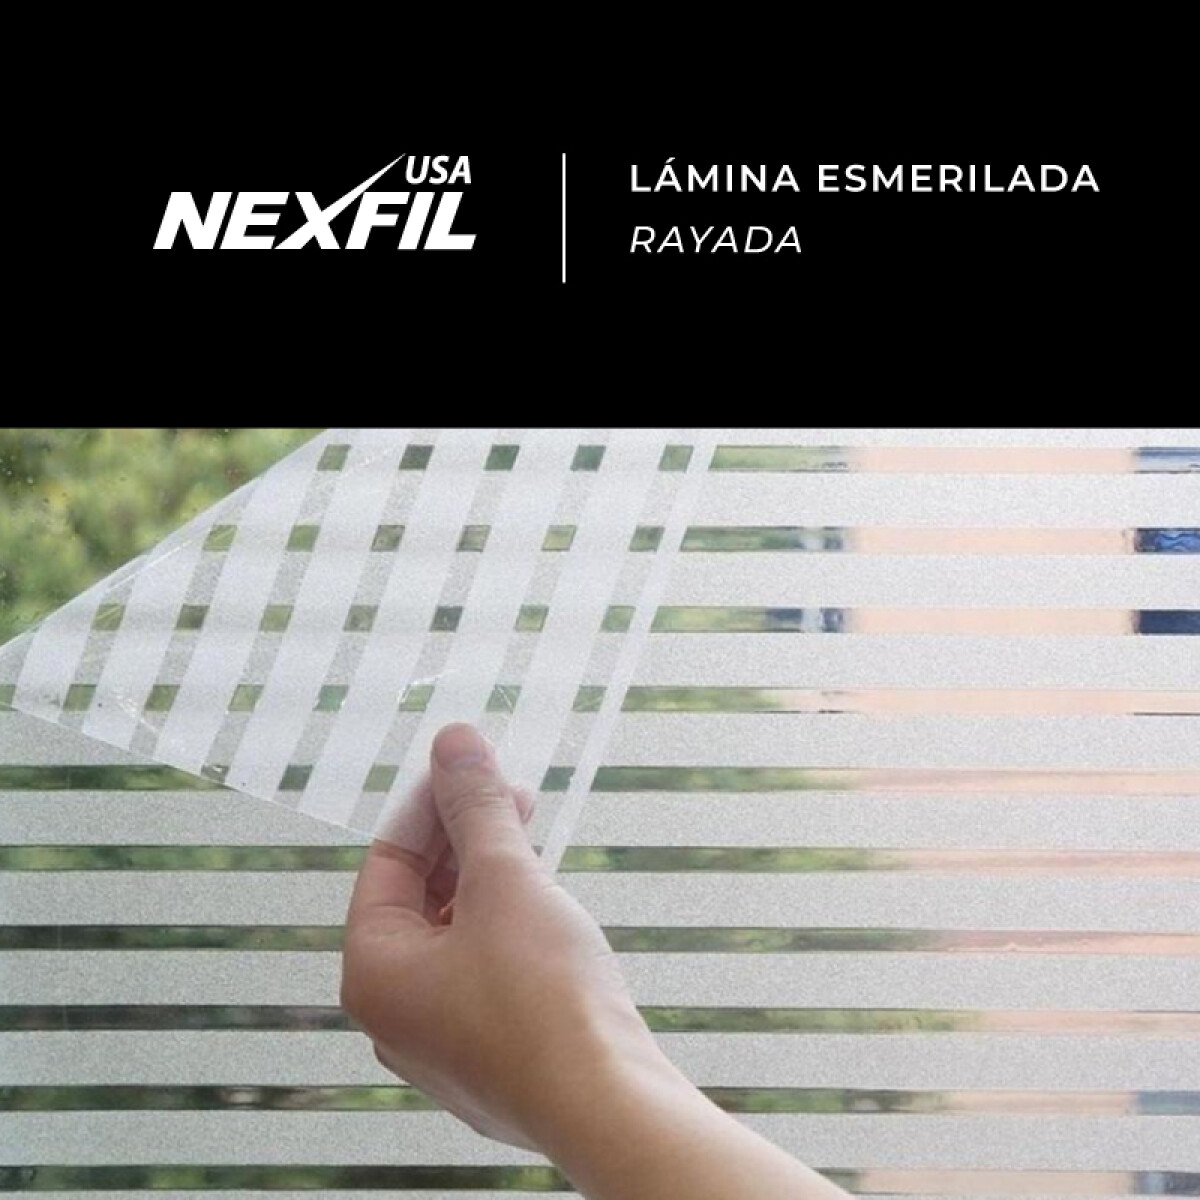 Lamina Esmerilada Rayada - Nexfil 